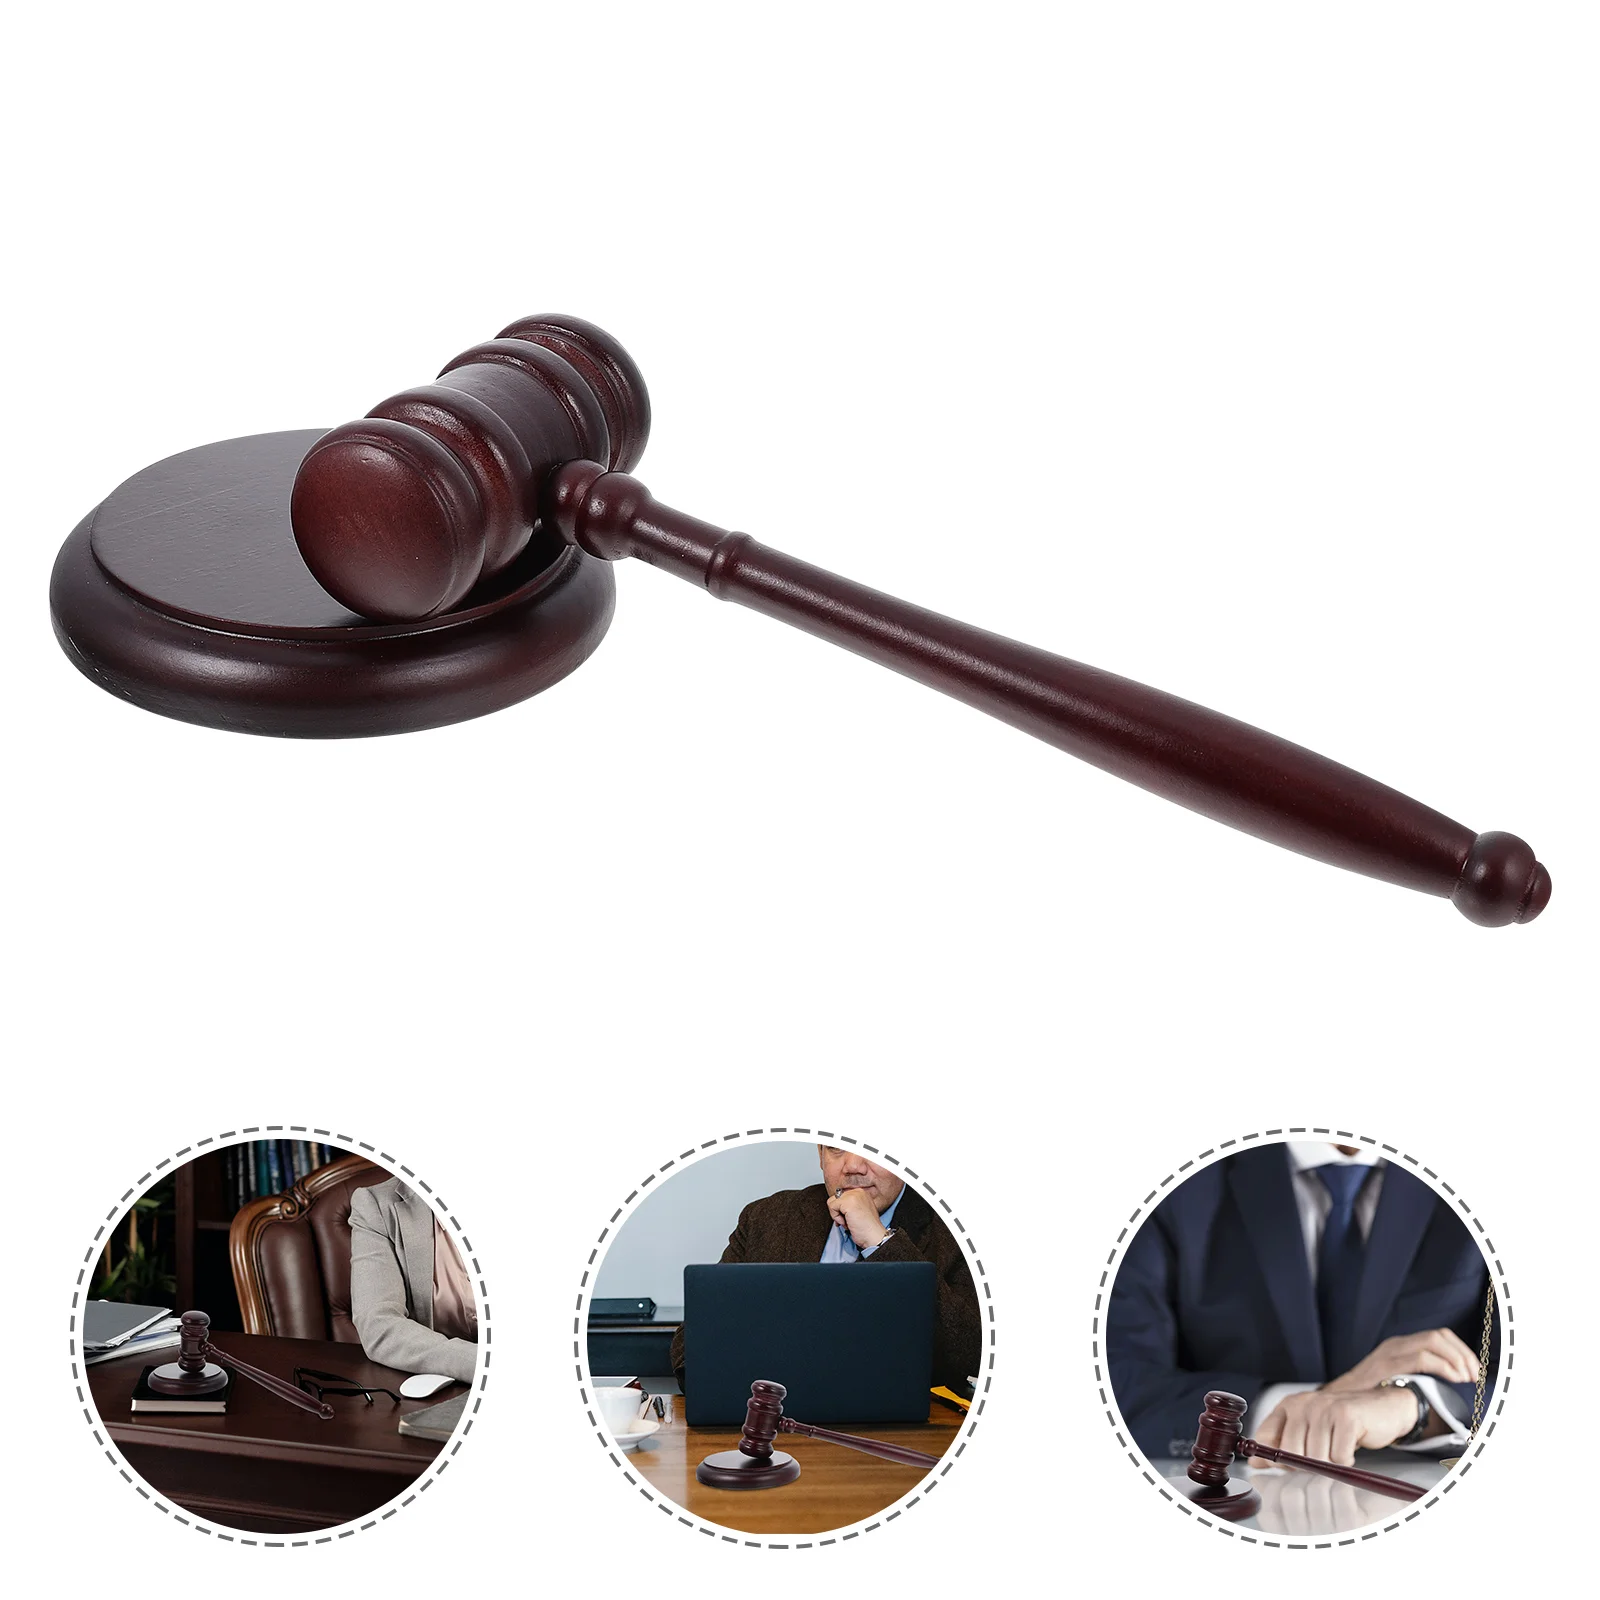 Courtroom Gavel Set Judge Hammer Wooden Handcrafted Auction Sound Round Block Lawyer Craft